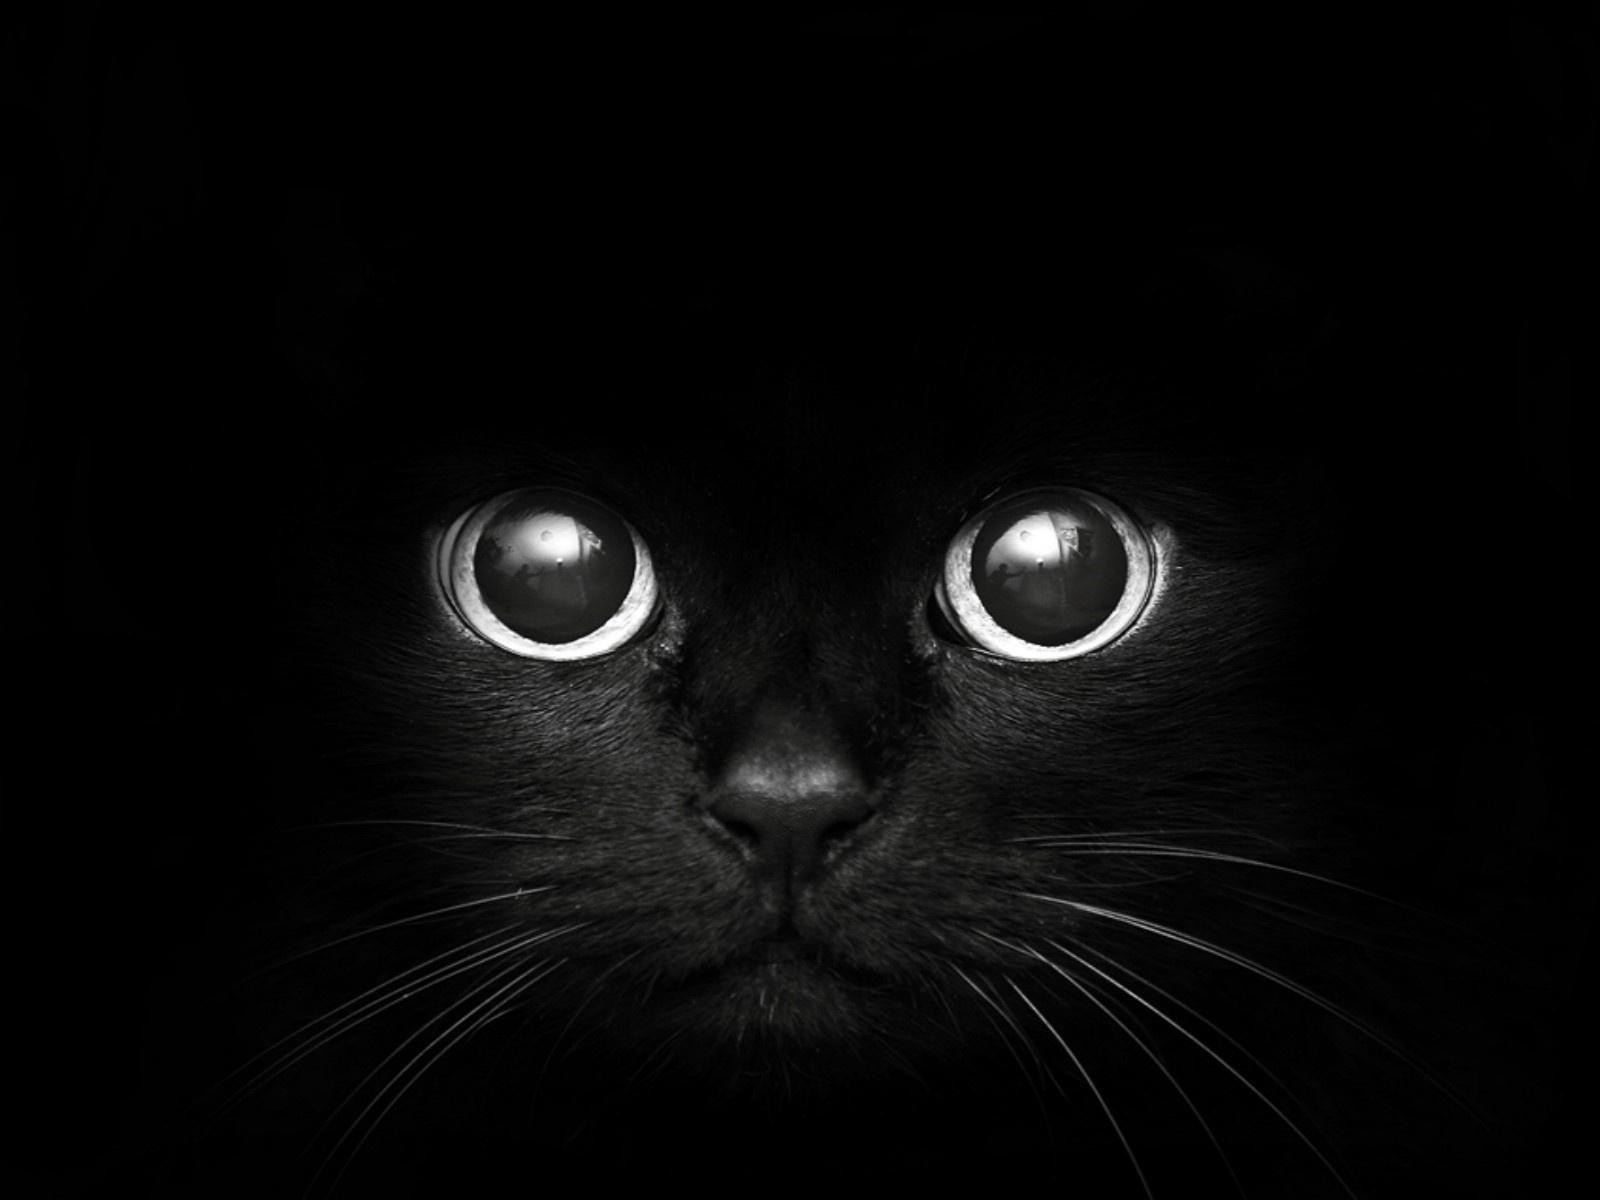 http://eskipaper.com/images/black-cat-wallpaper-4.jpg